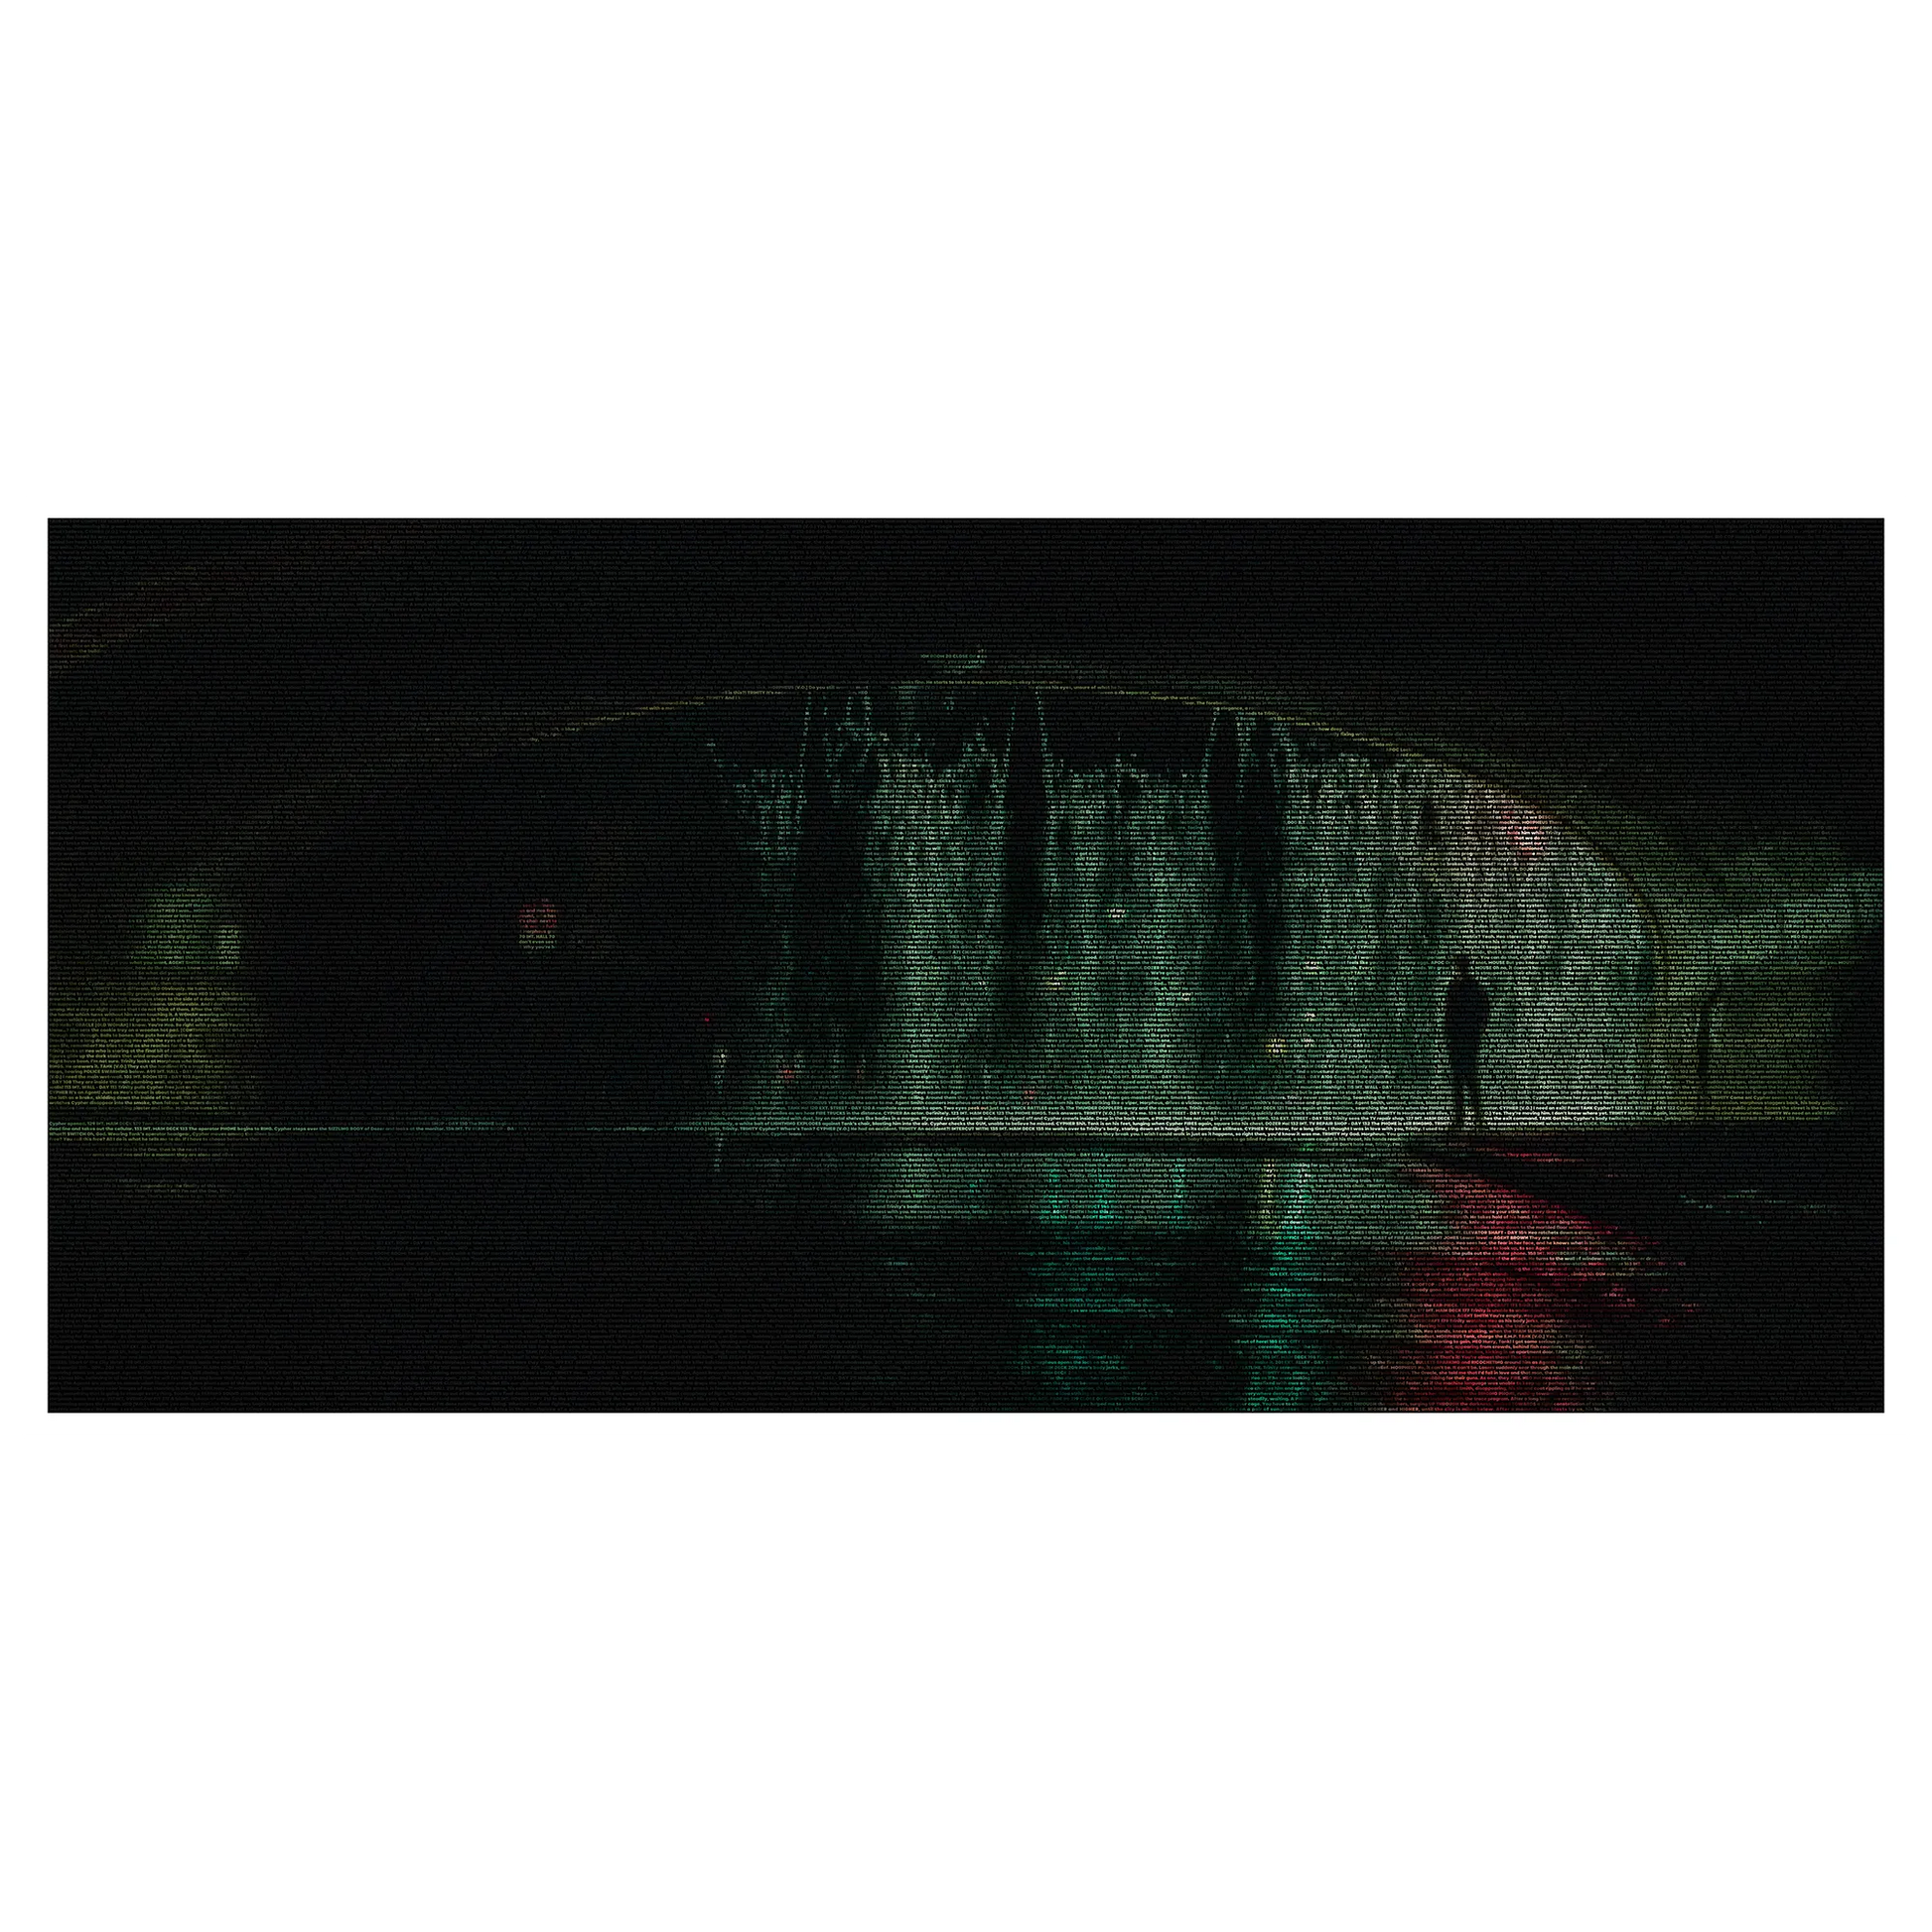 A print featuring the Adams Street Bridge scene from The Matrix.